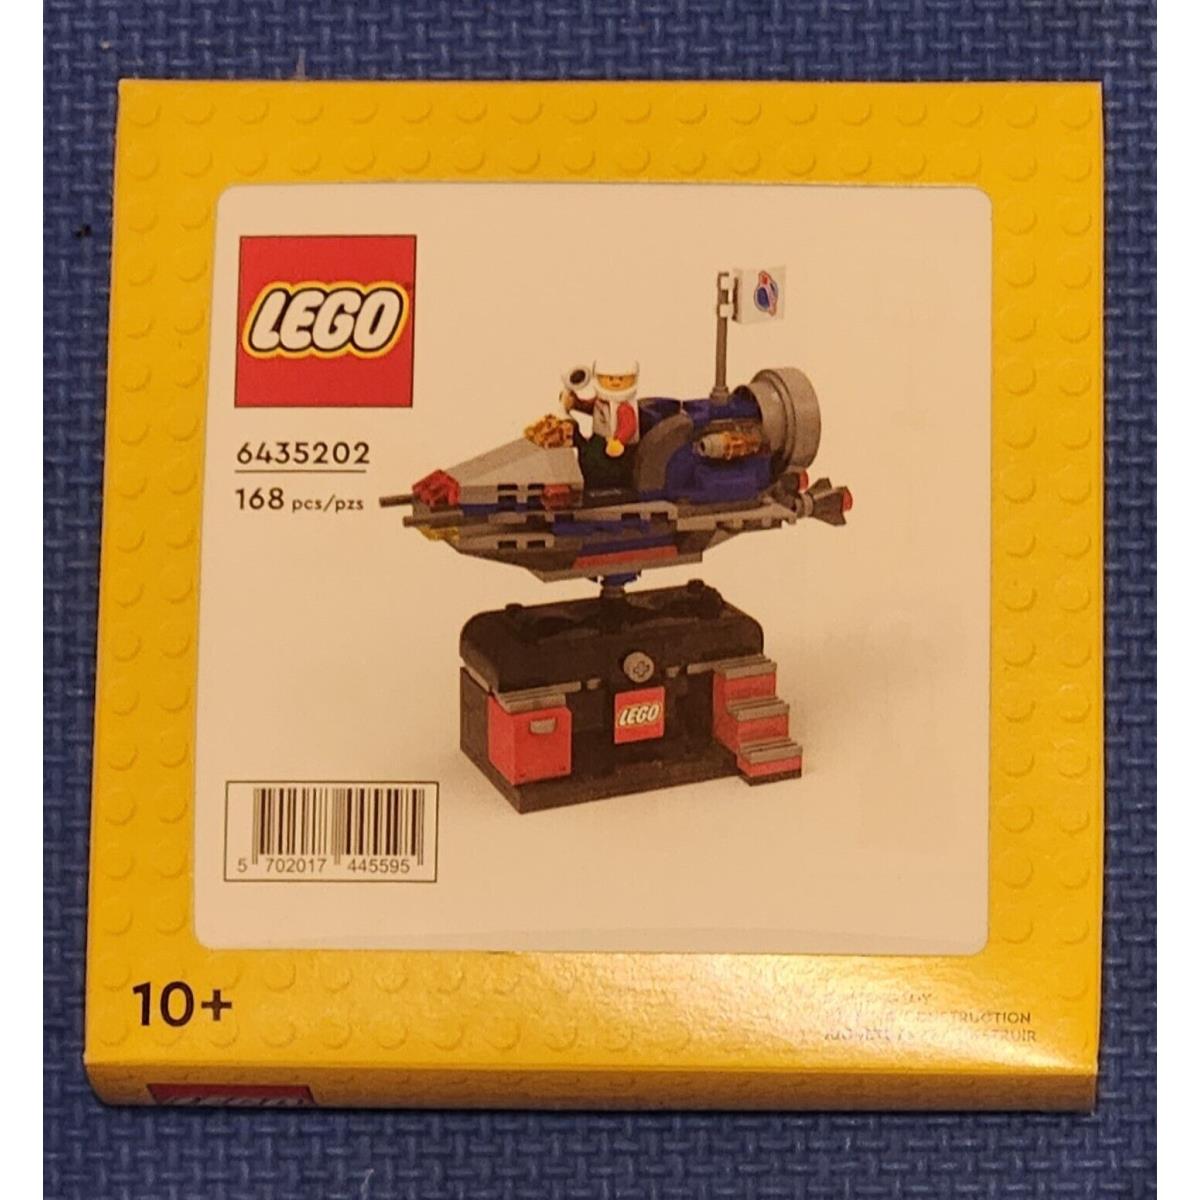 Lego 5007490 Vip Space Adventure Ride Set 6435202